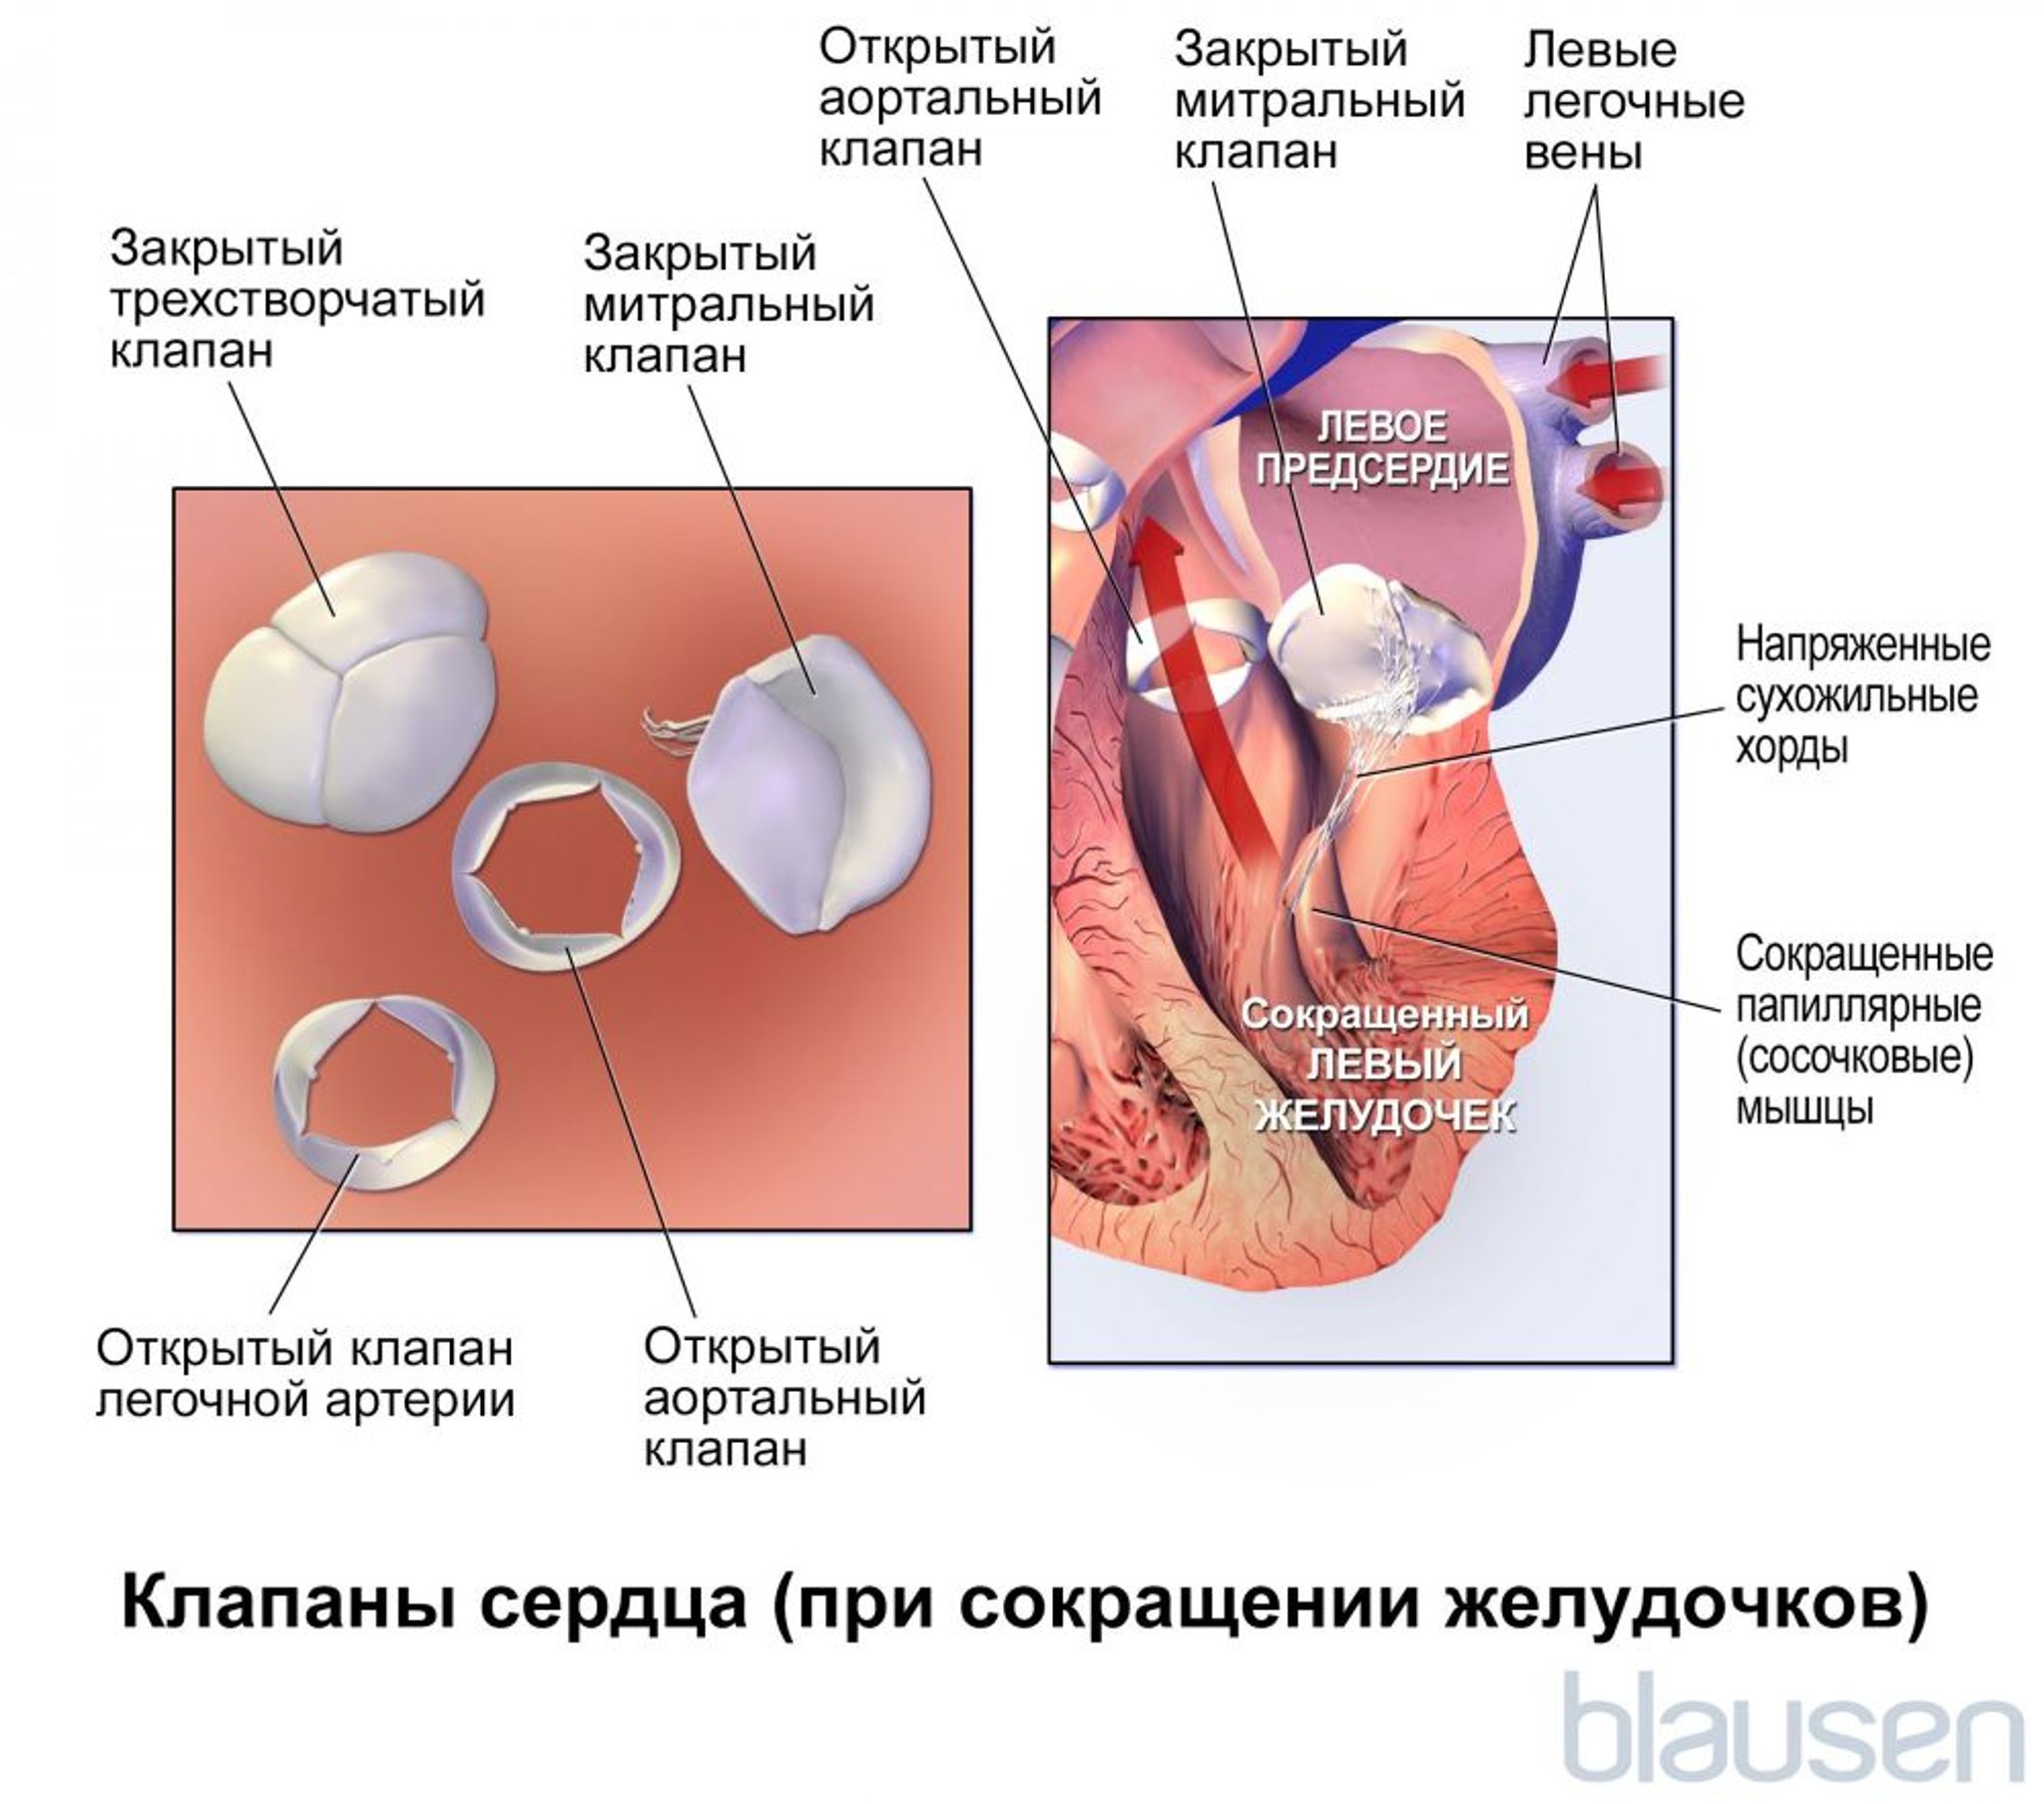 Клапаны сердца (при сокращении желудочков)